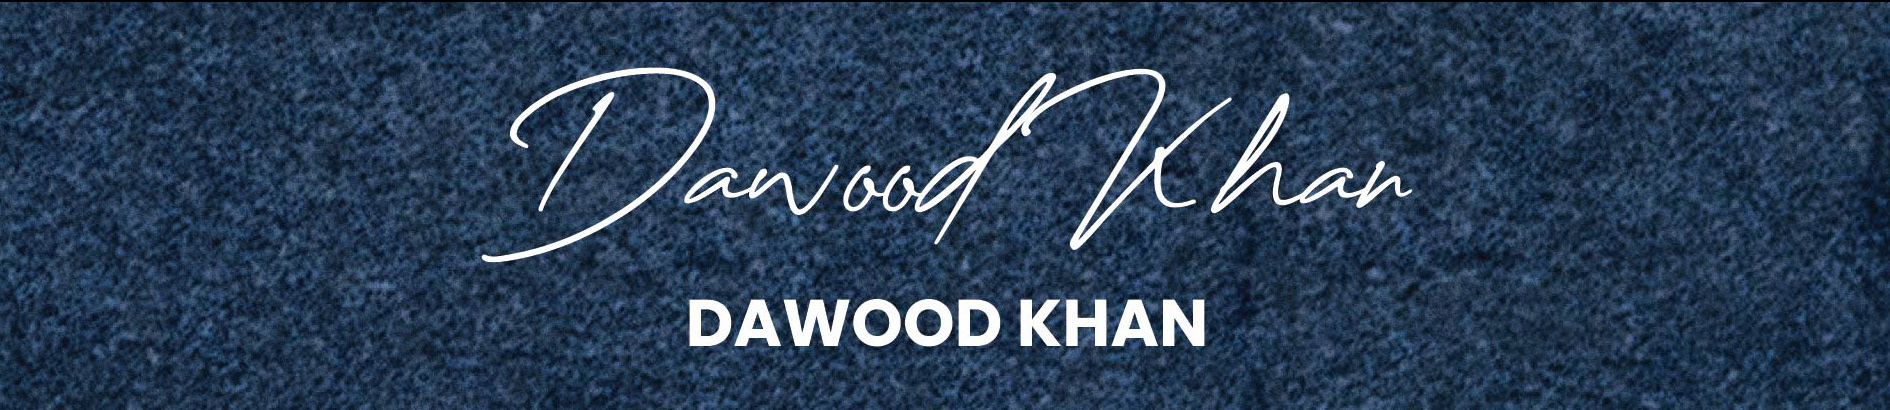 Banner del profilo di Muhammad Dawood Khan